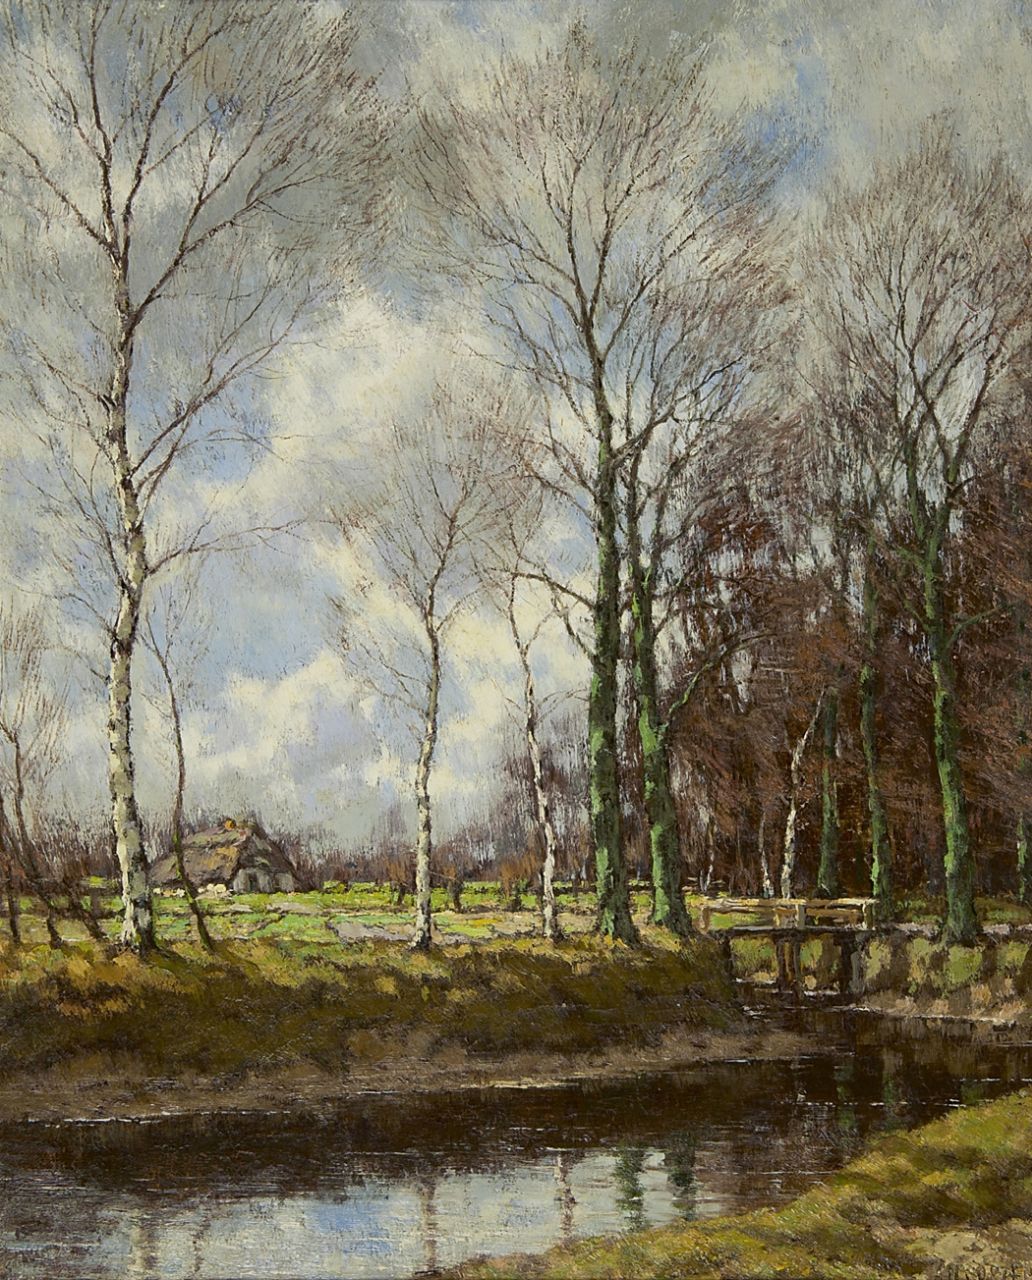 Gorter A.M.  | 'Arnold' Marc Gorter, A farm near the Vordense Beek, oil on canvas 56.6 x 46.1 cm, signed l.r.